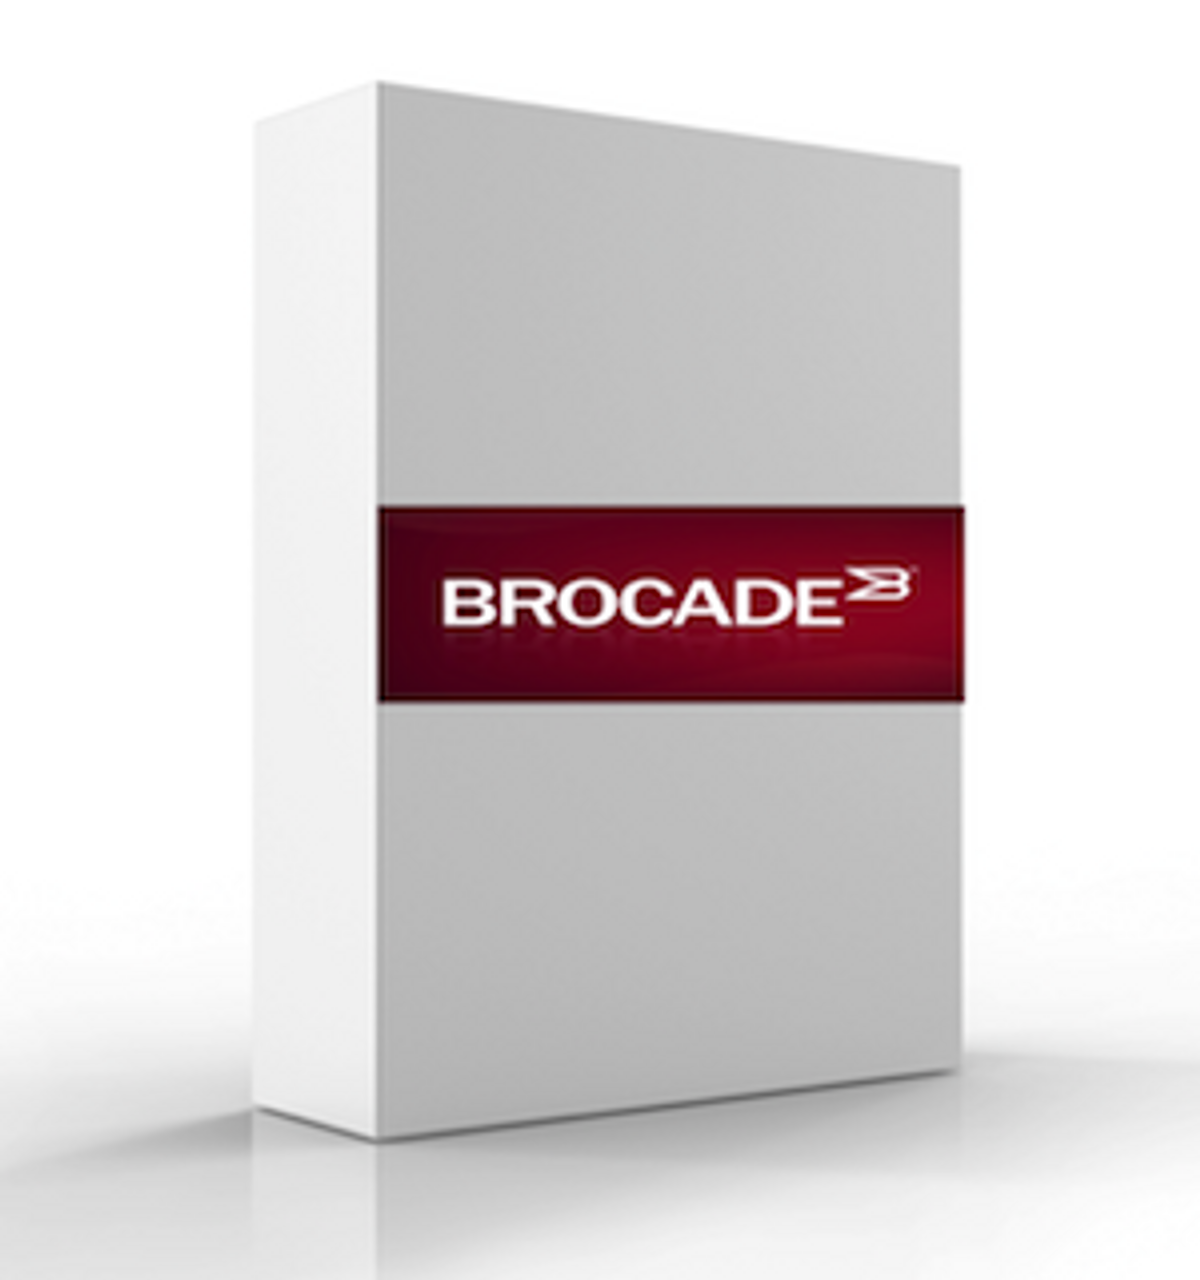 BR-SMEDFWH-01 - Brocade FABRIC WATCH LICENSE